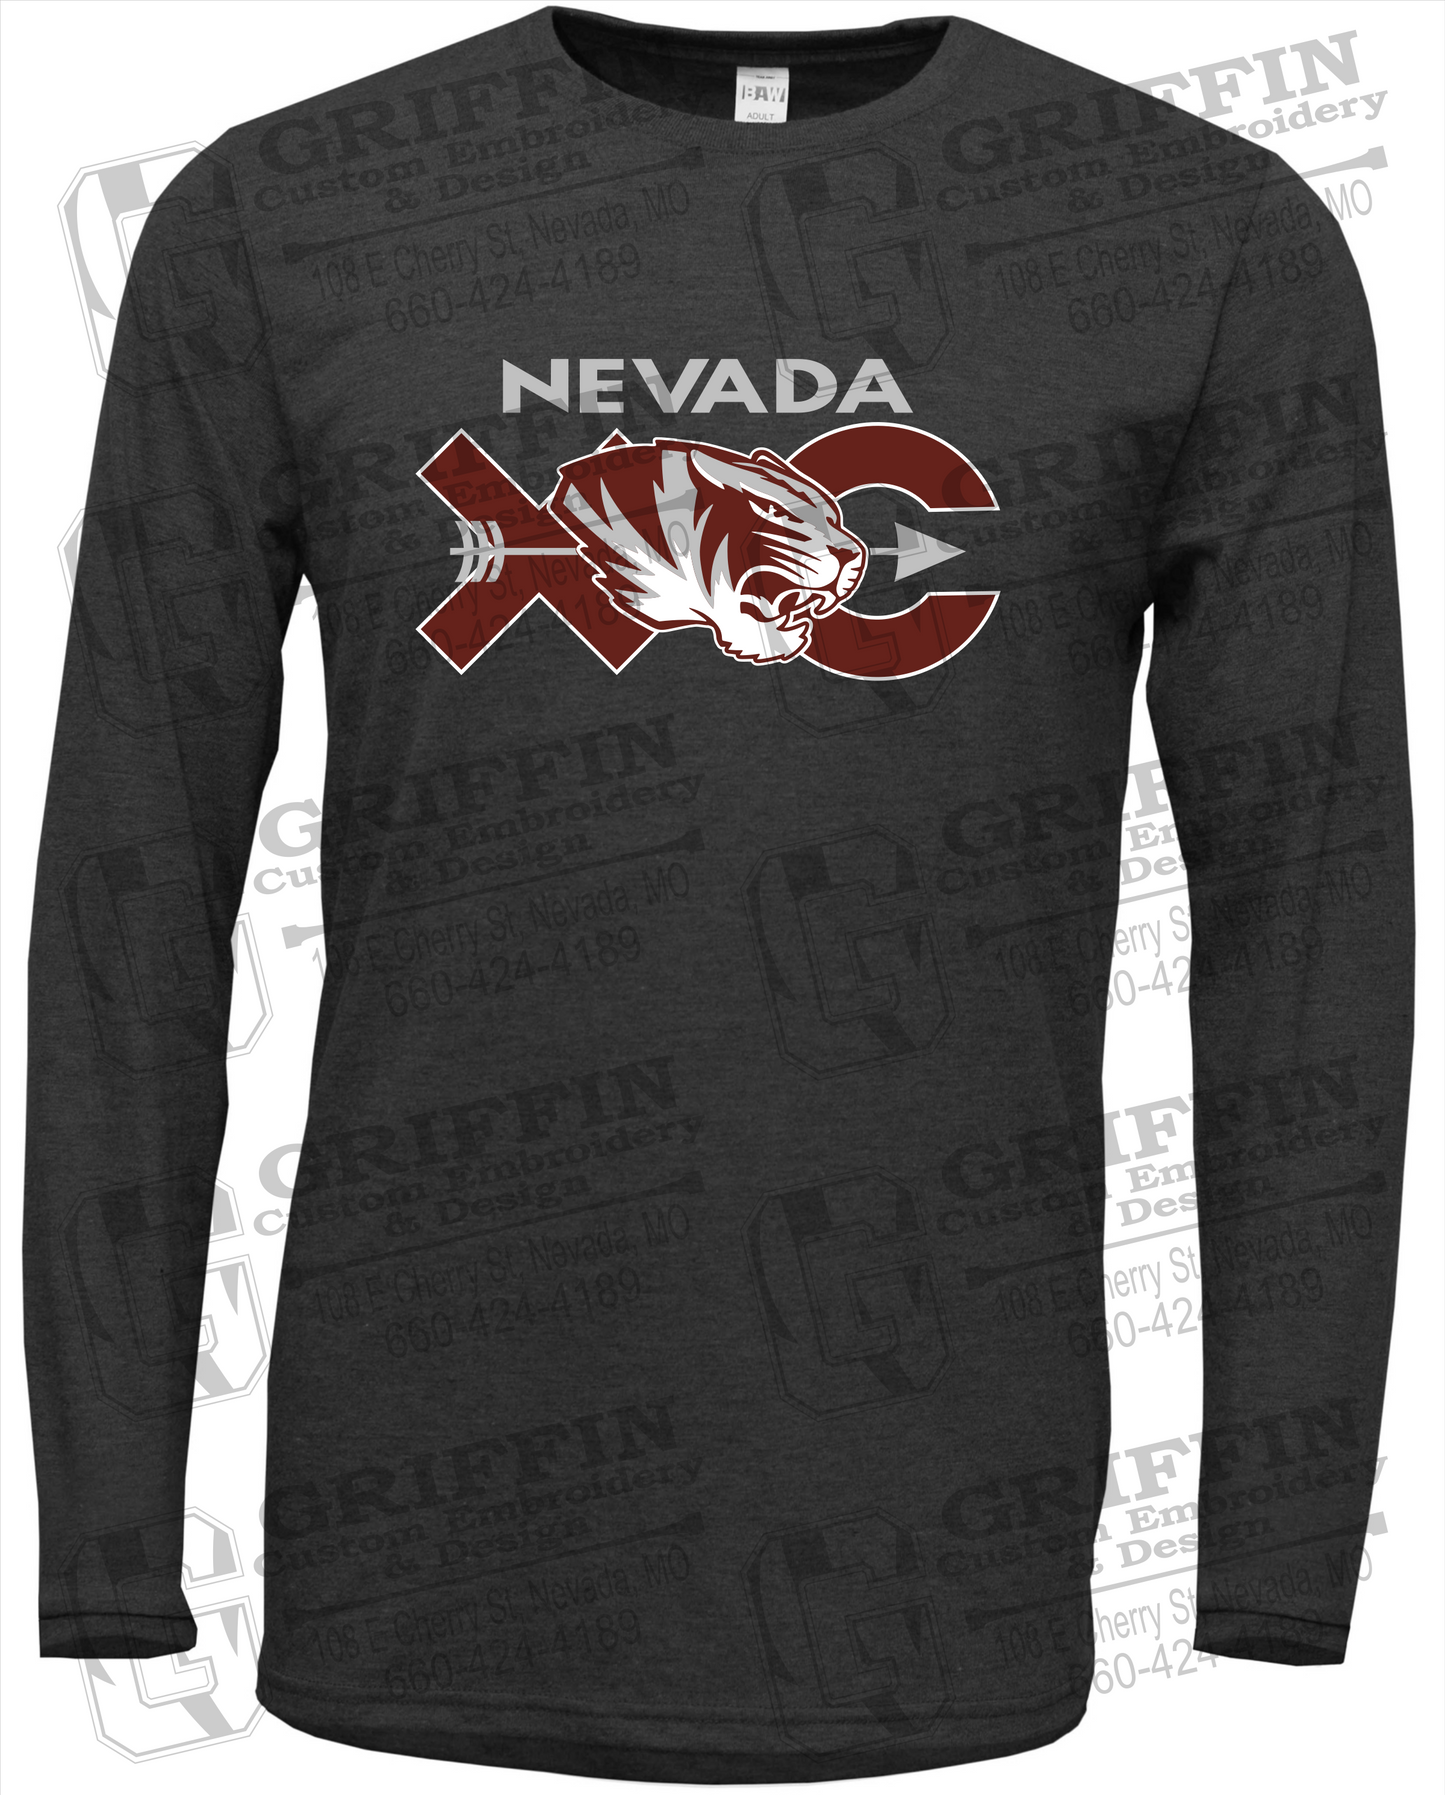 Soft-Tek Long Sleeve T-Shirt - Cross Country - Nevada Tigers 23-T